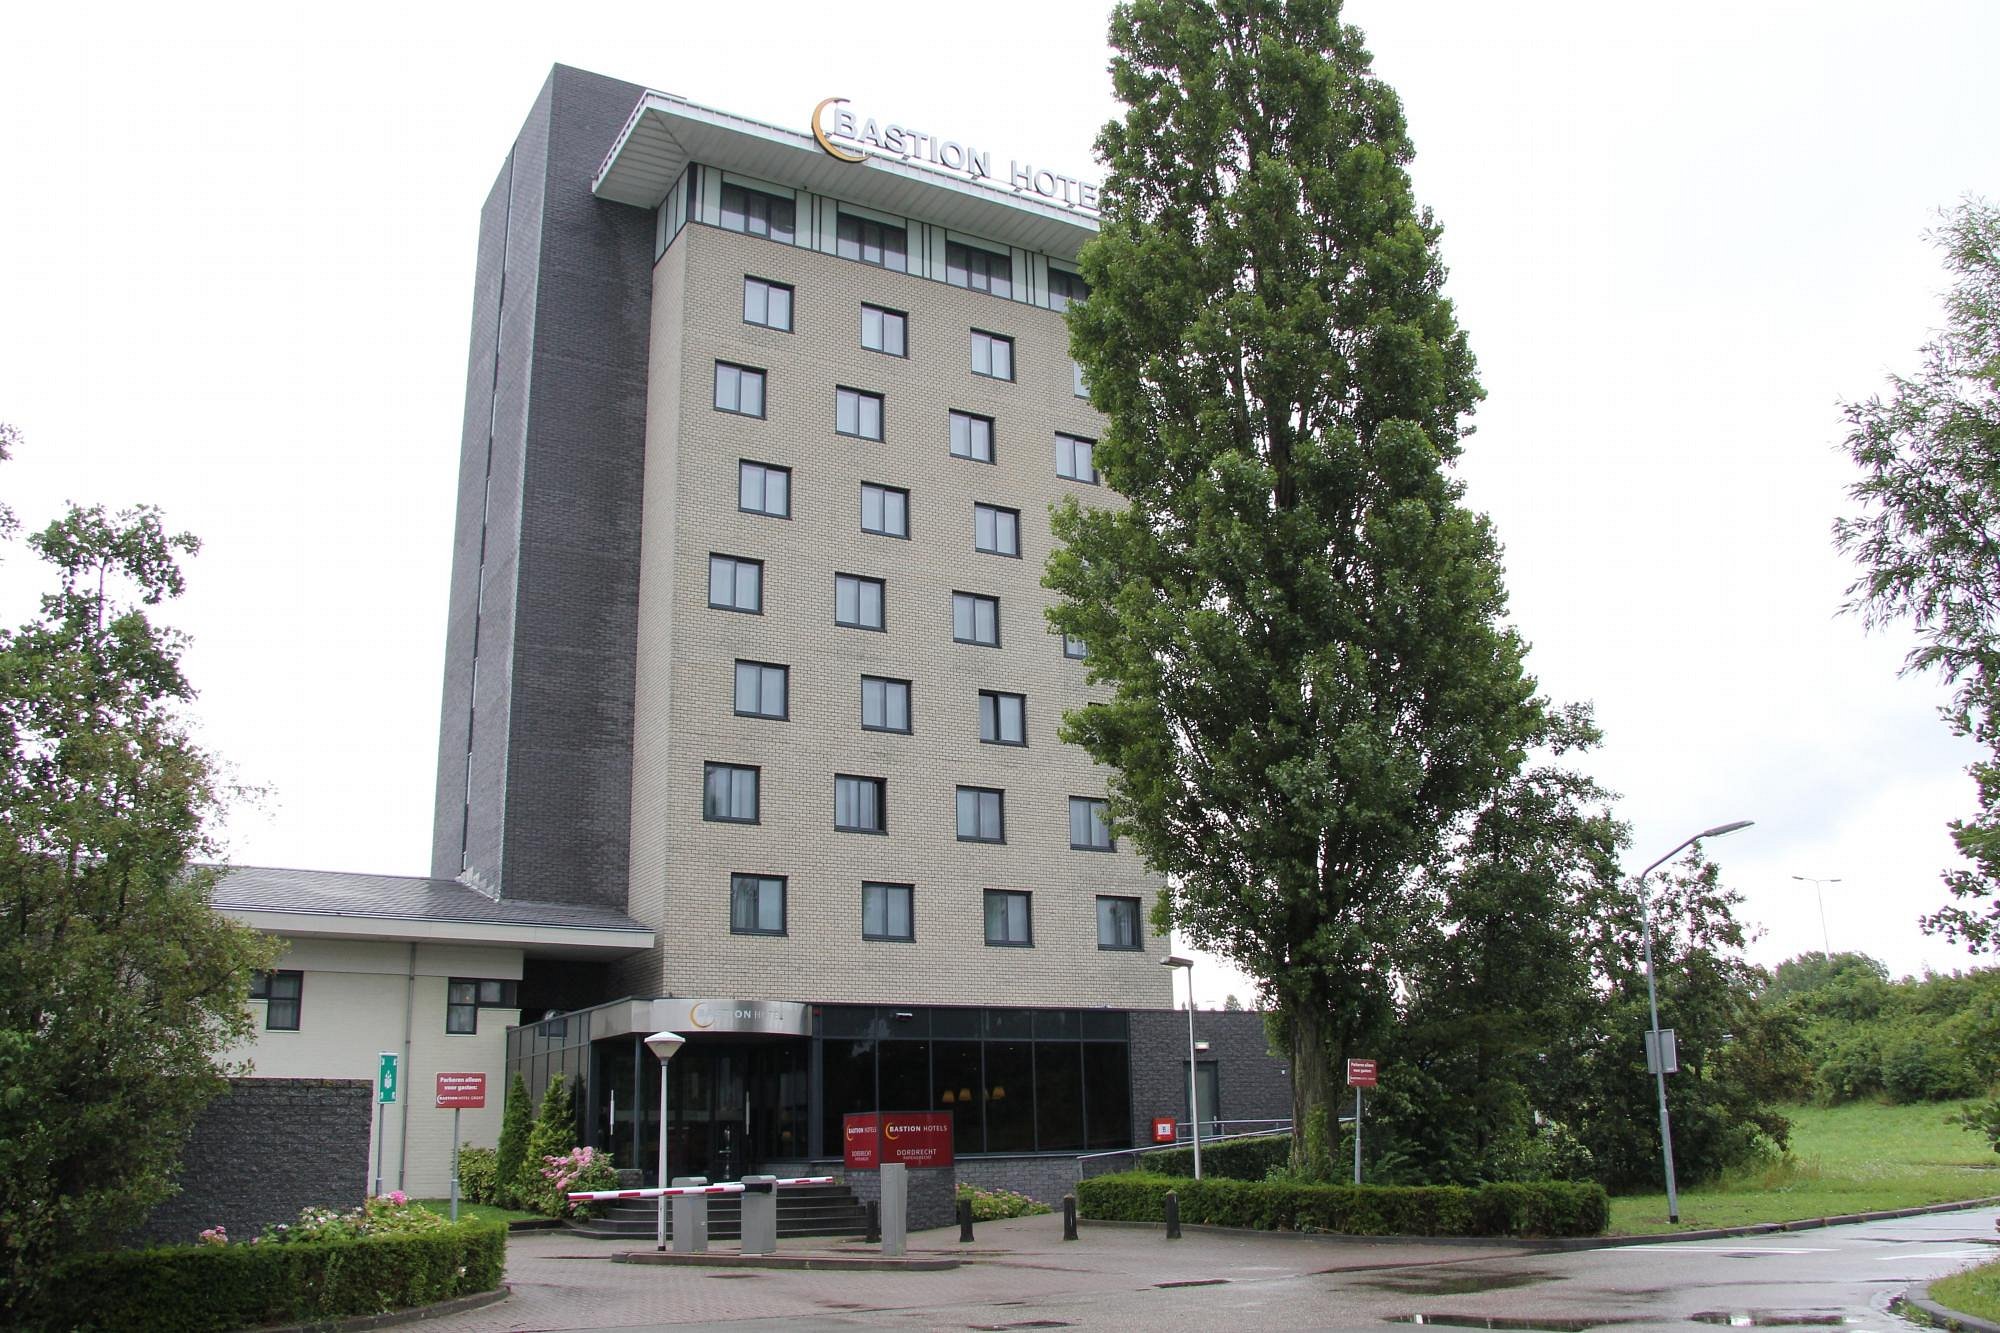 Bastion Hotel Dordrecht - Papendrecht image